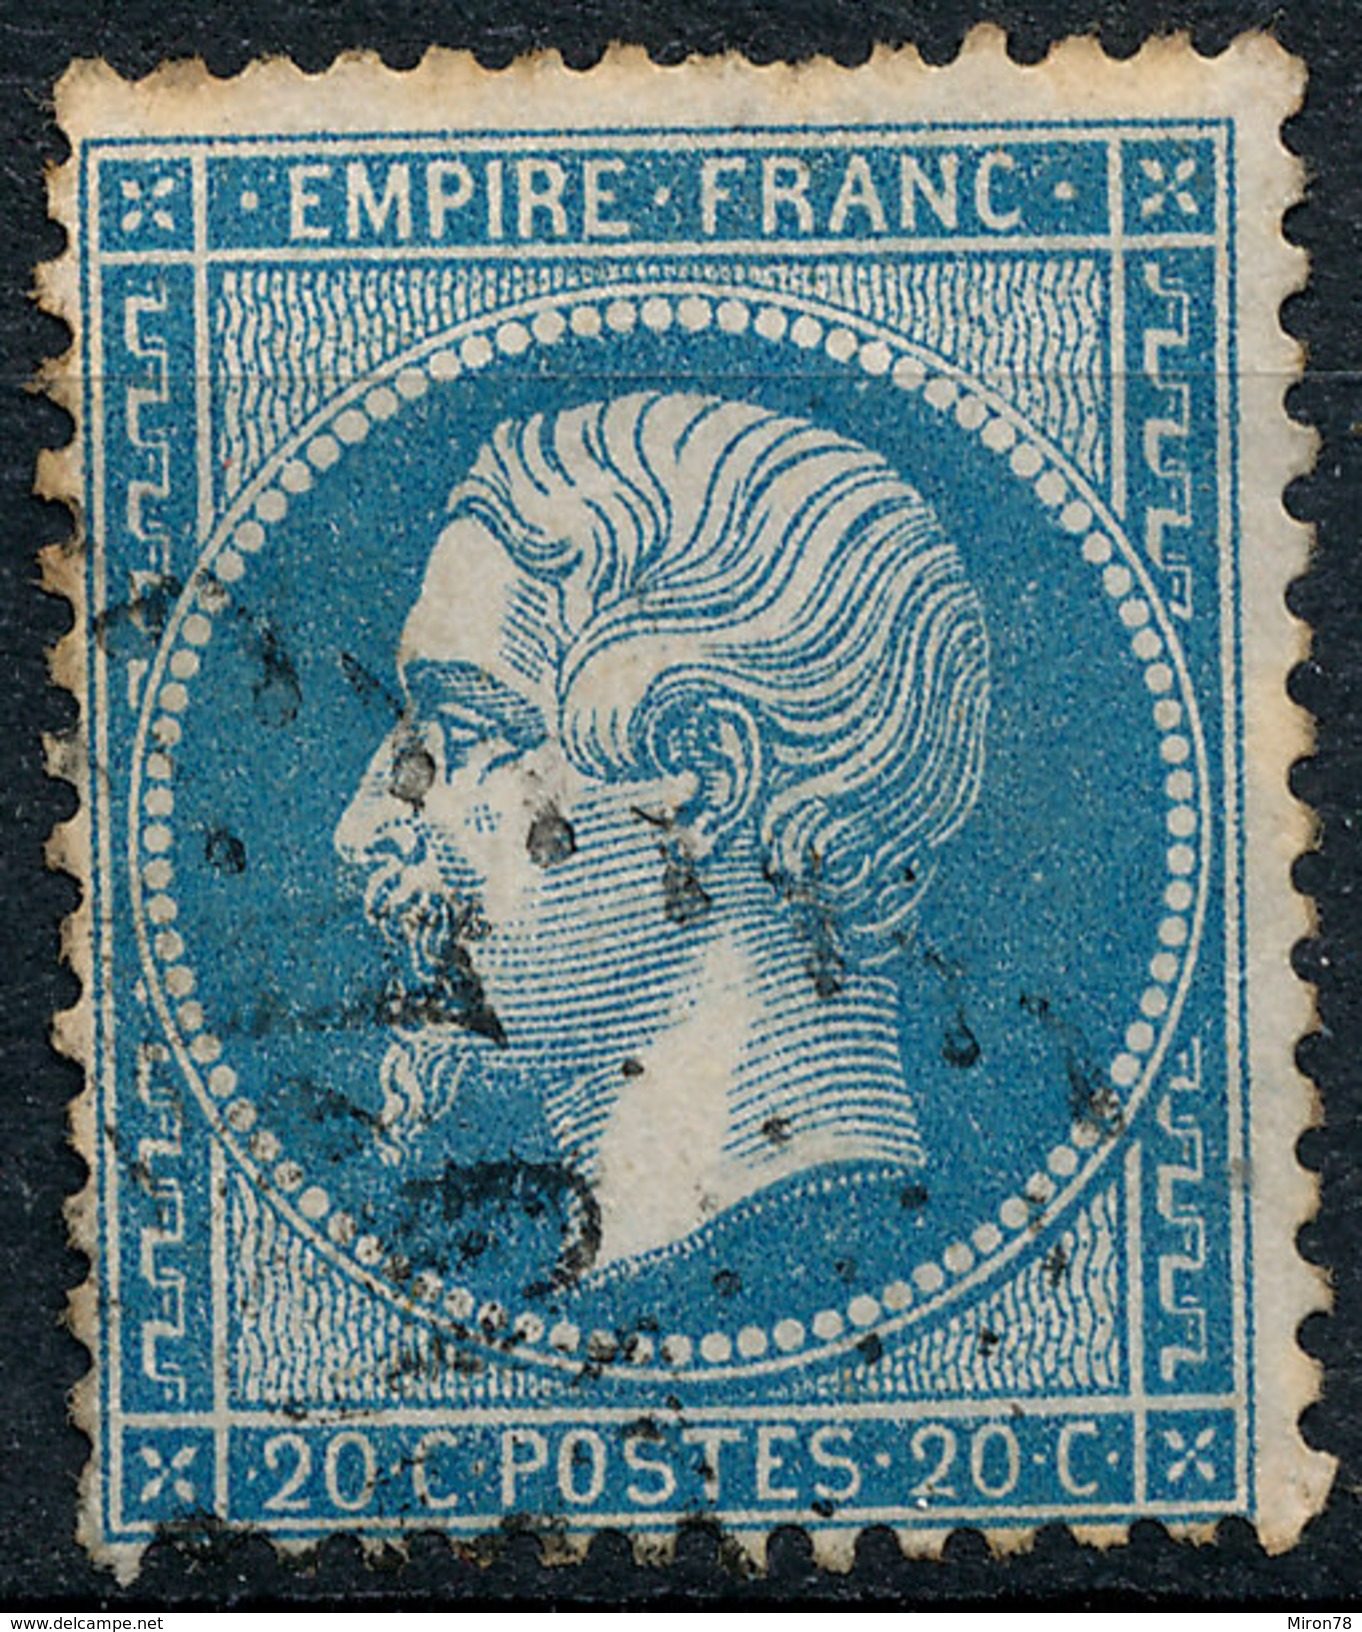 Stamp France 1862 20c Numeral Used Lot#164 - 1862 Napoleon III